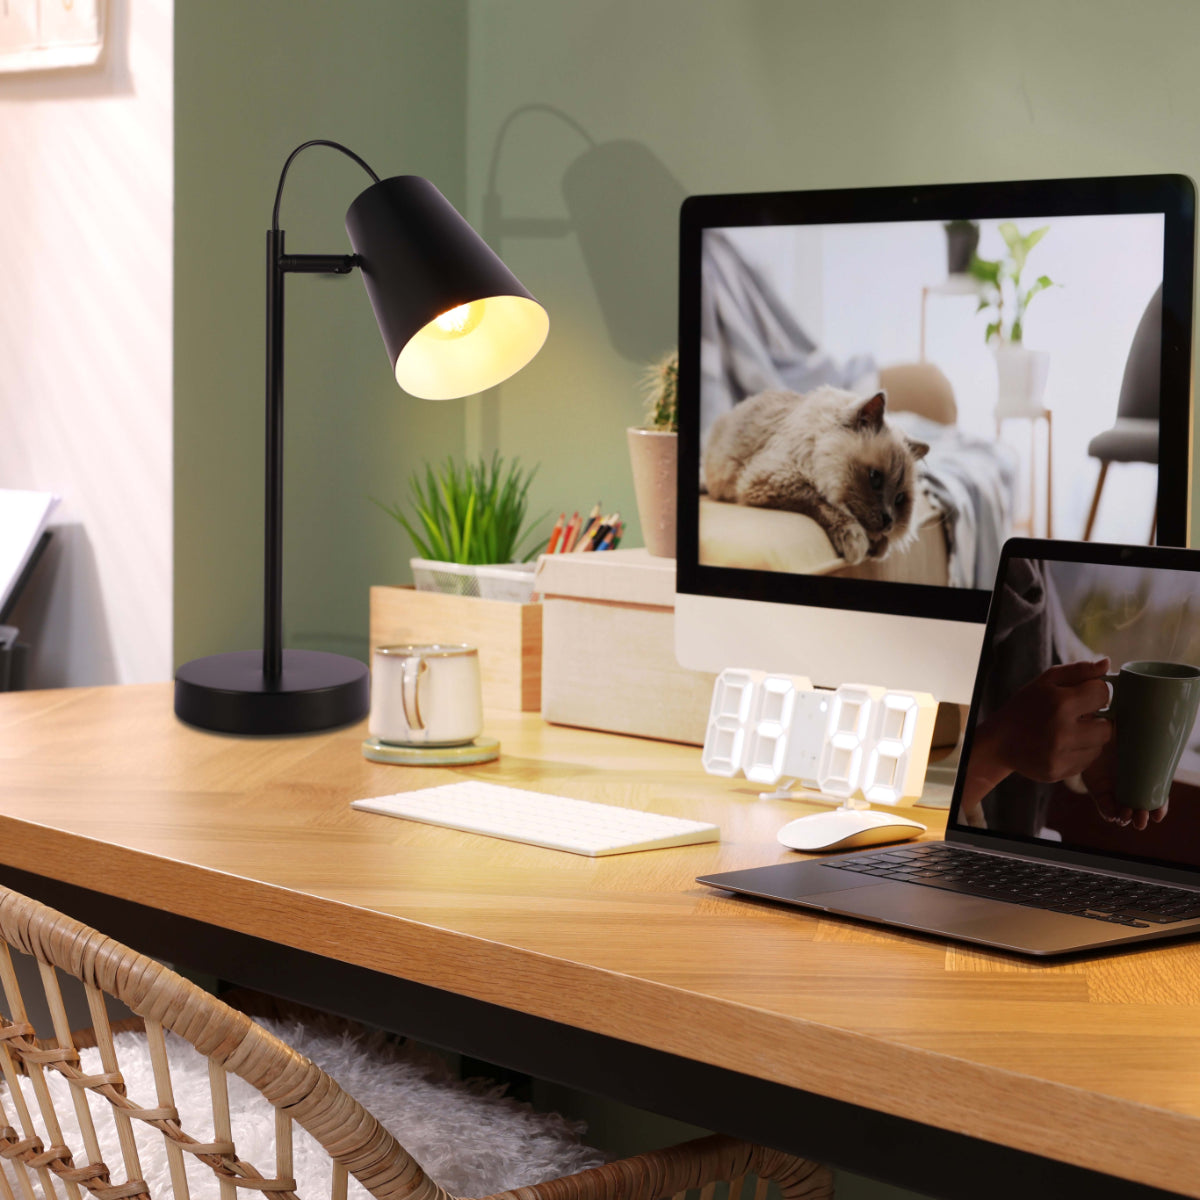 Usage of Sleek Cut Cone Desk Lamp in Vibrant Colors - Modern Elegance 130-03664